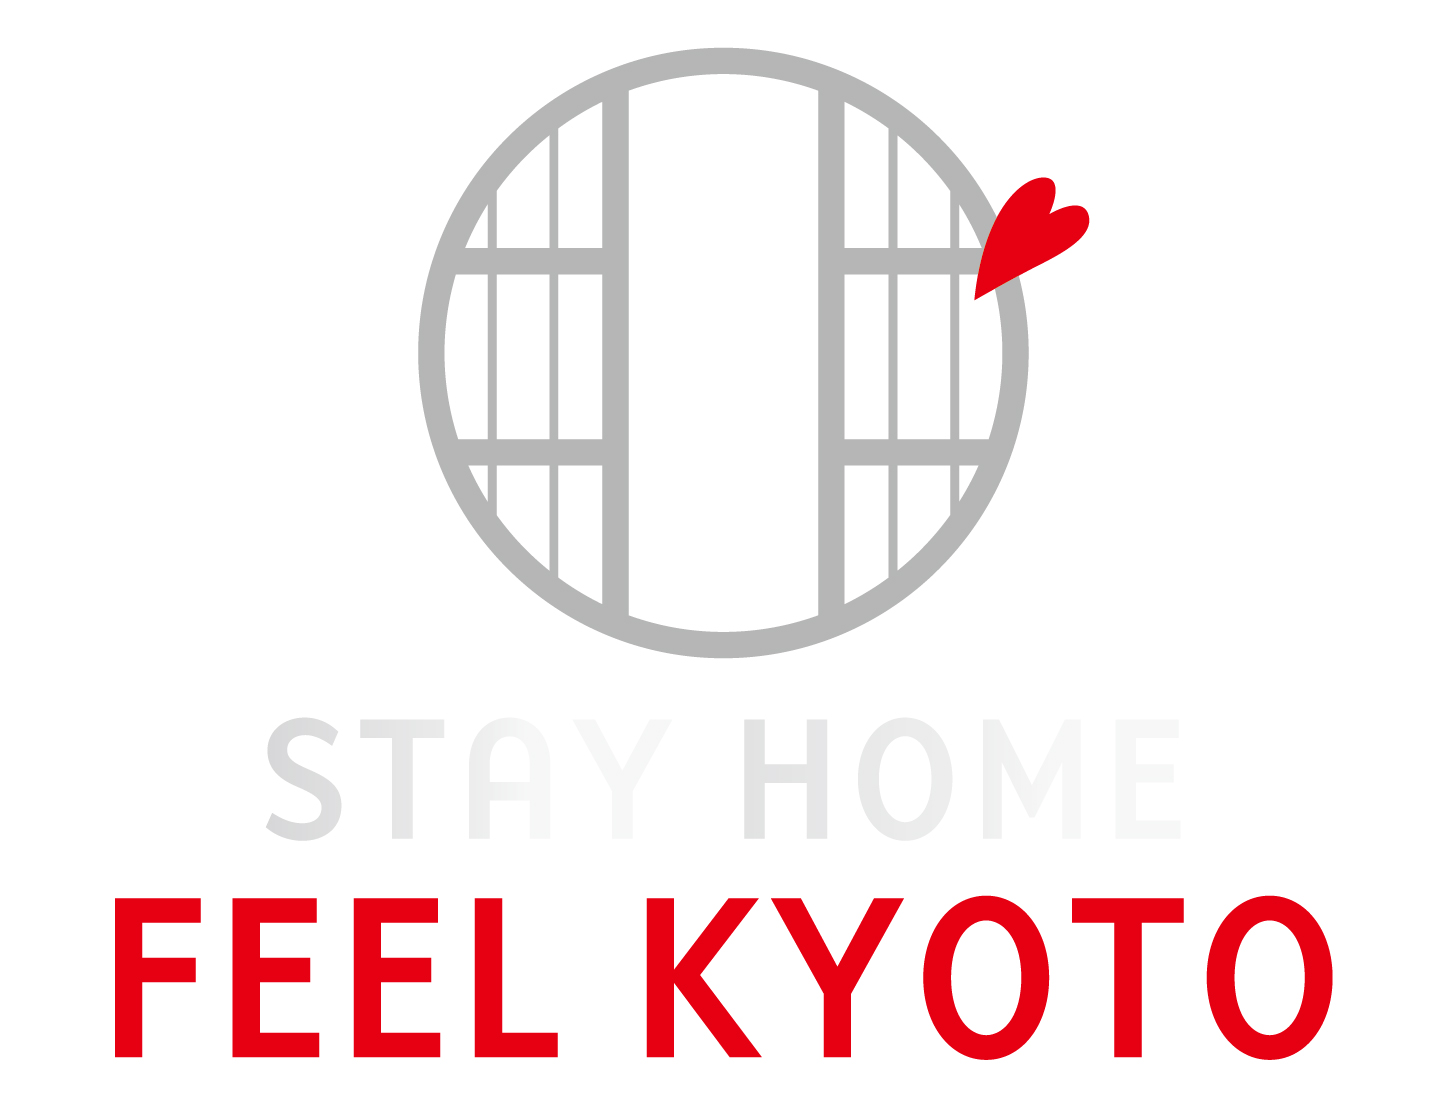 Stay Home Feel Kyotoキャンペーン 京都市公式 京都観光navi